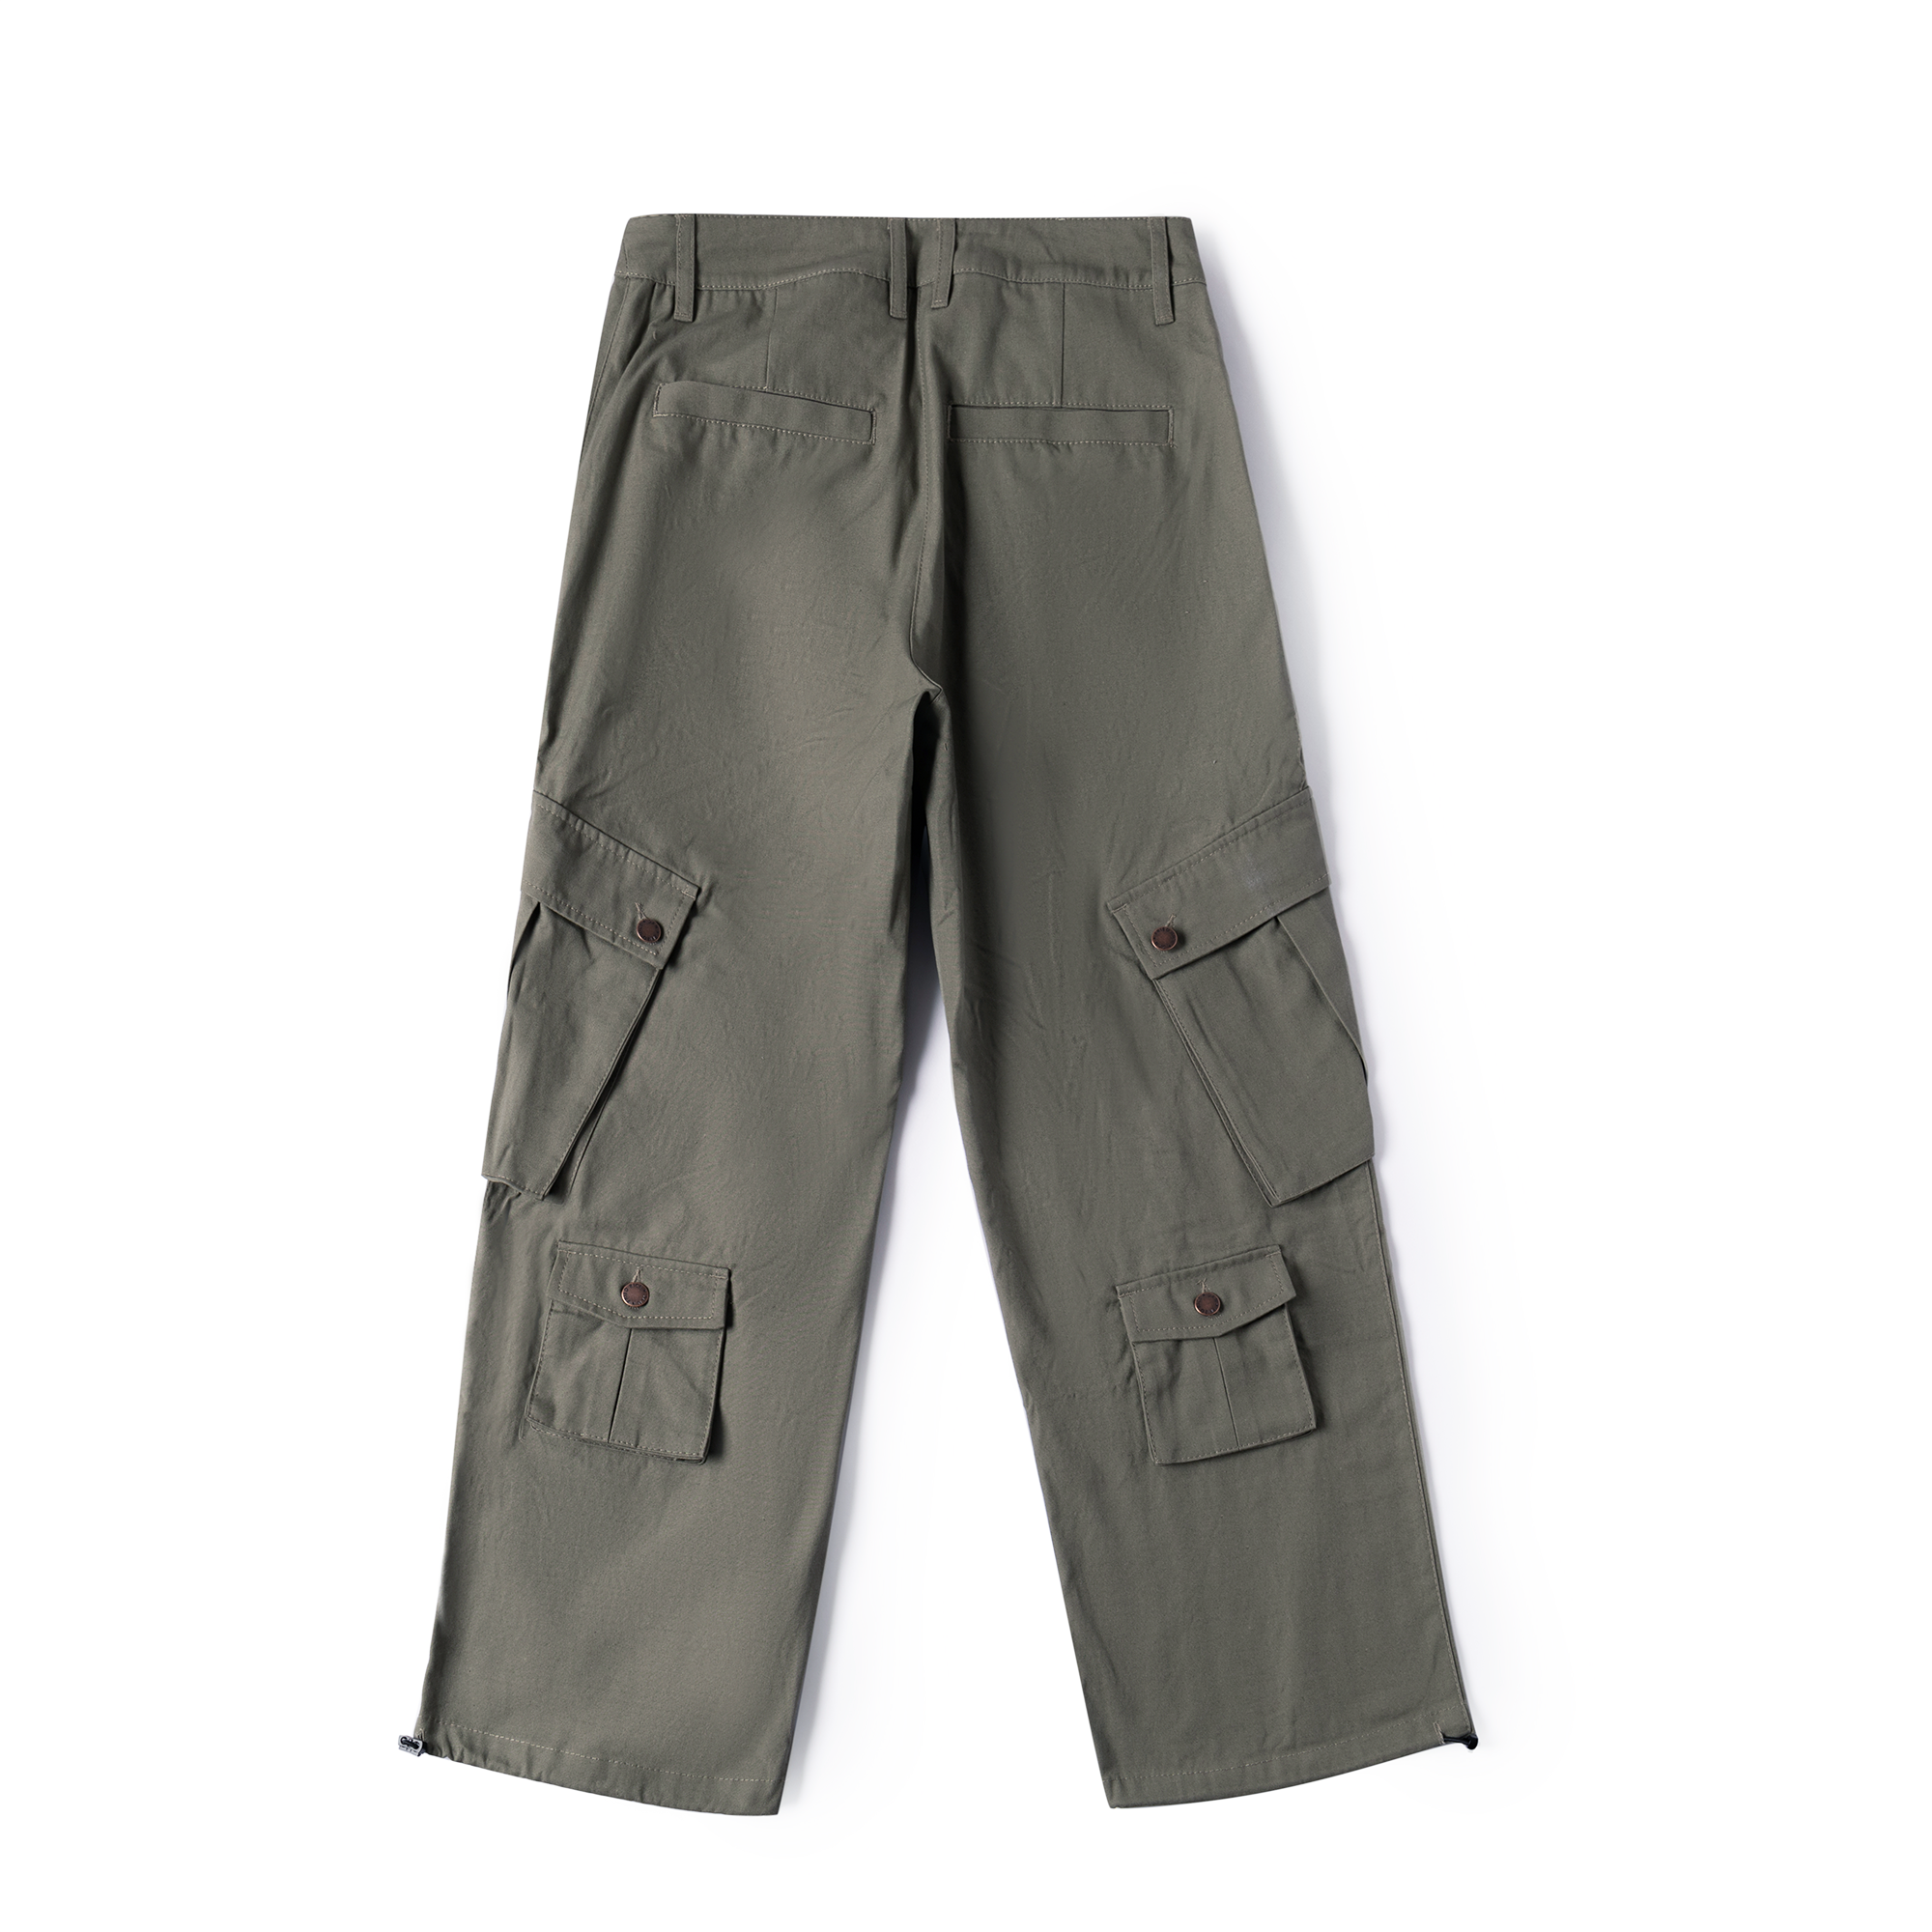 Wrangler Men's Relaxed Fit Flex Cargo Pants - Khaki 40x30 : Target